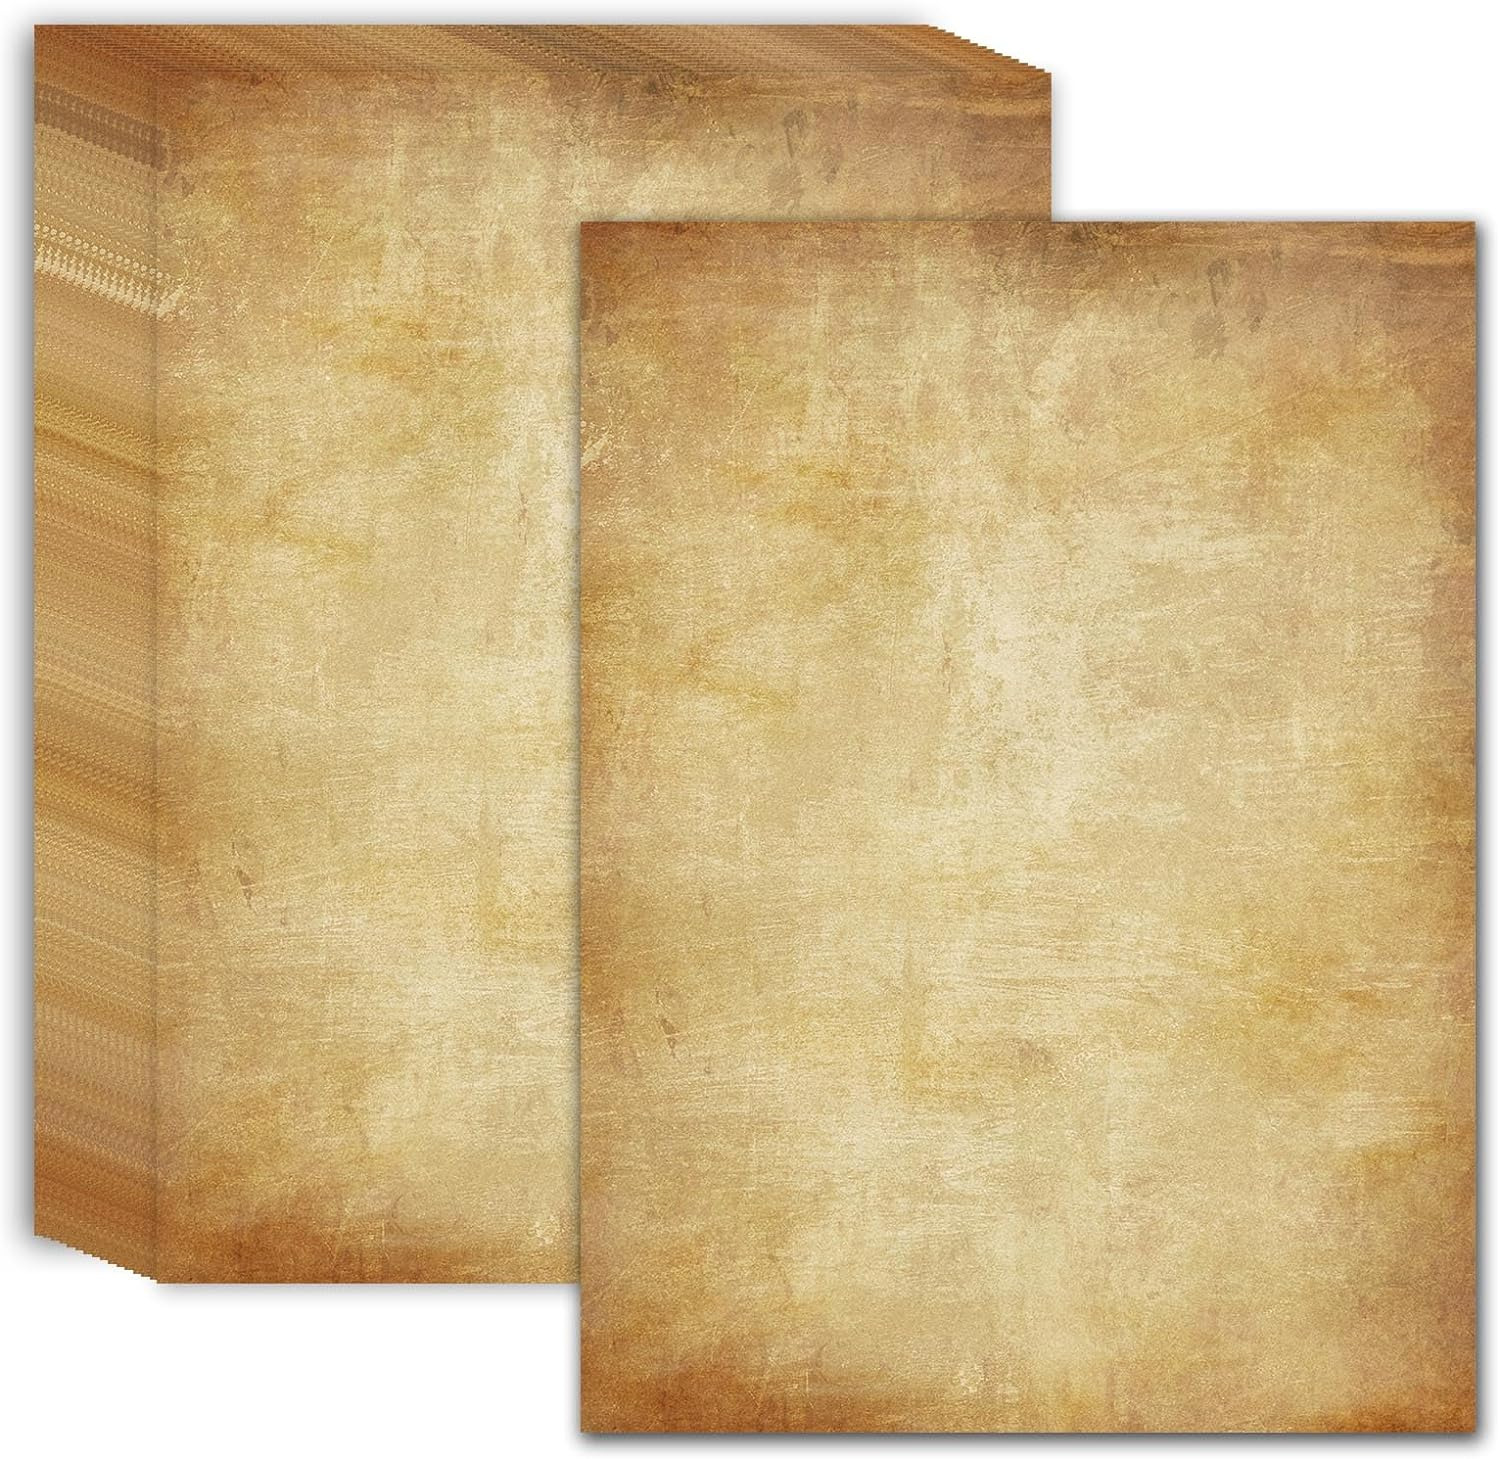 60 PCS Old Fashioned Faux Parchment Paper Aged Paper Antique Looking 8.5 x 11